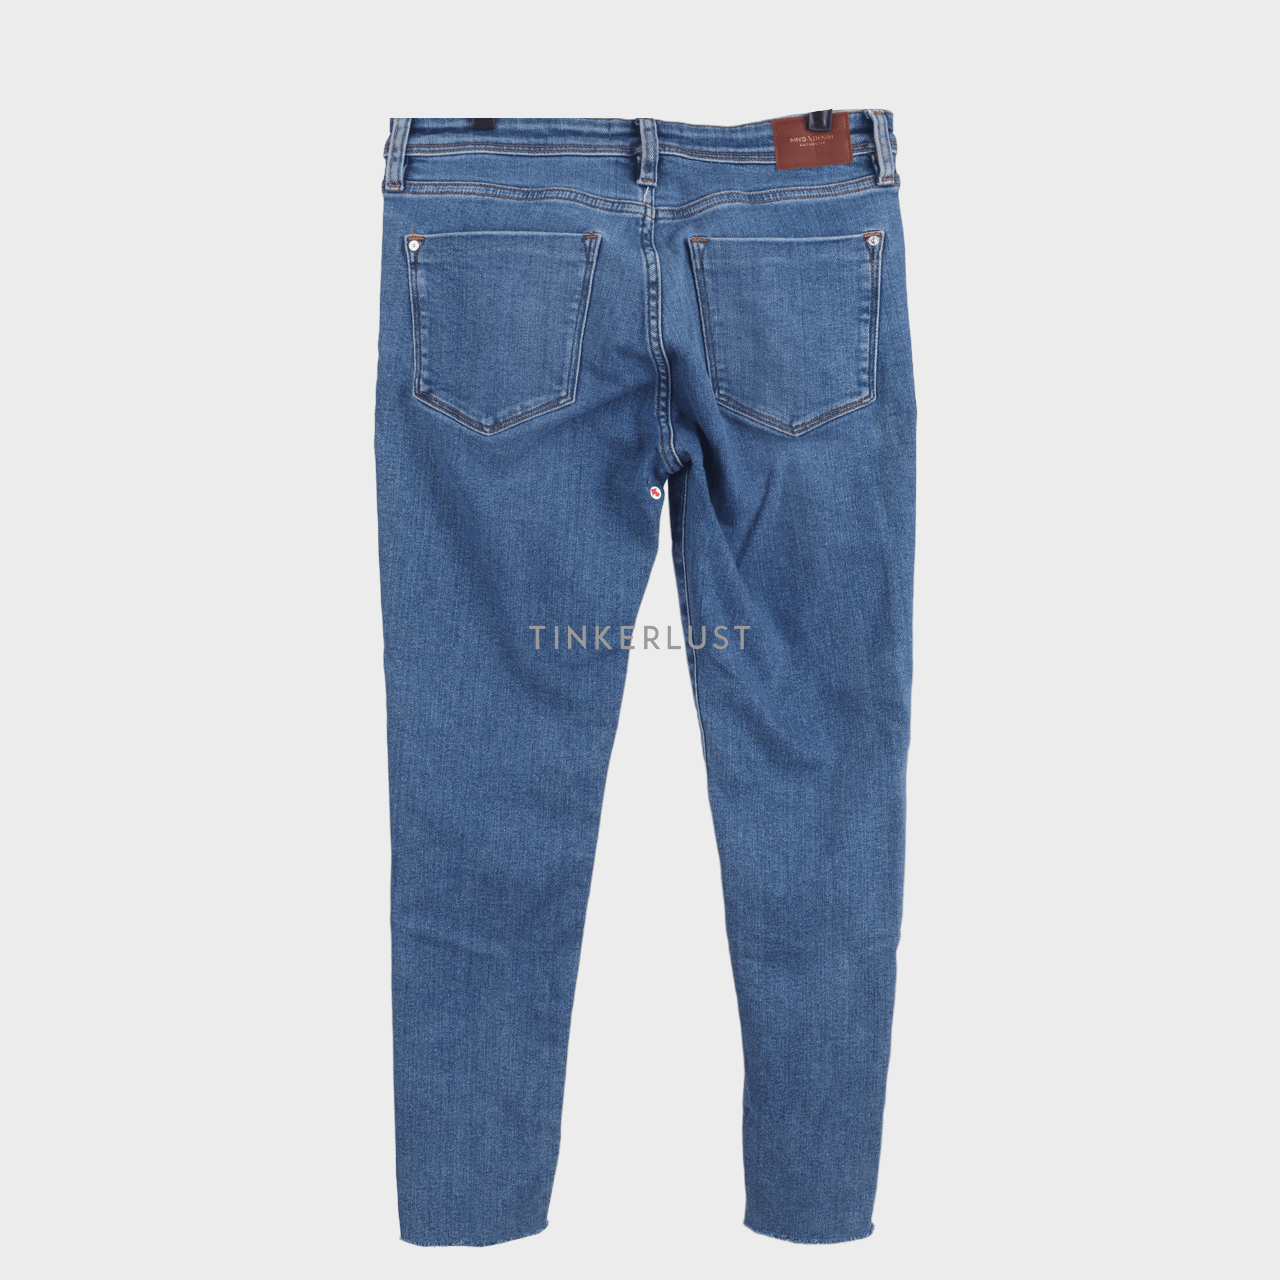 Mango Blue Jeans Unfinished Long Pants